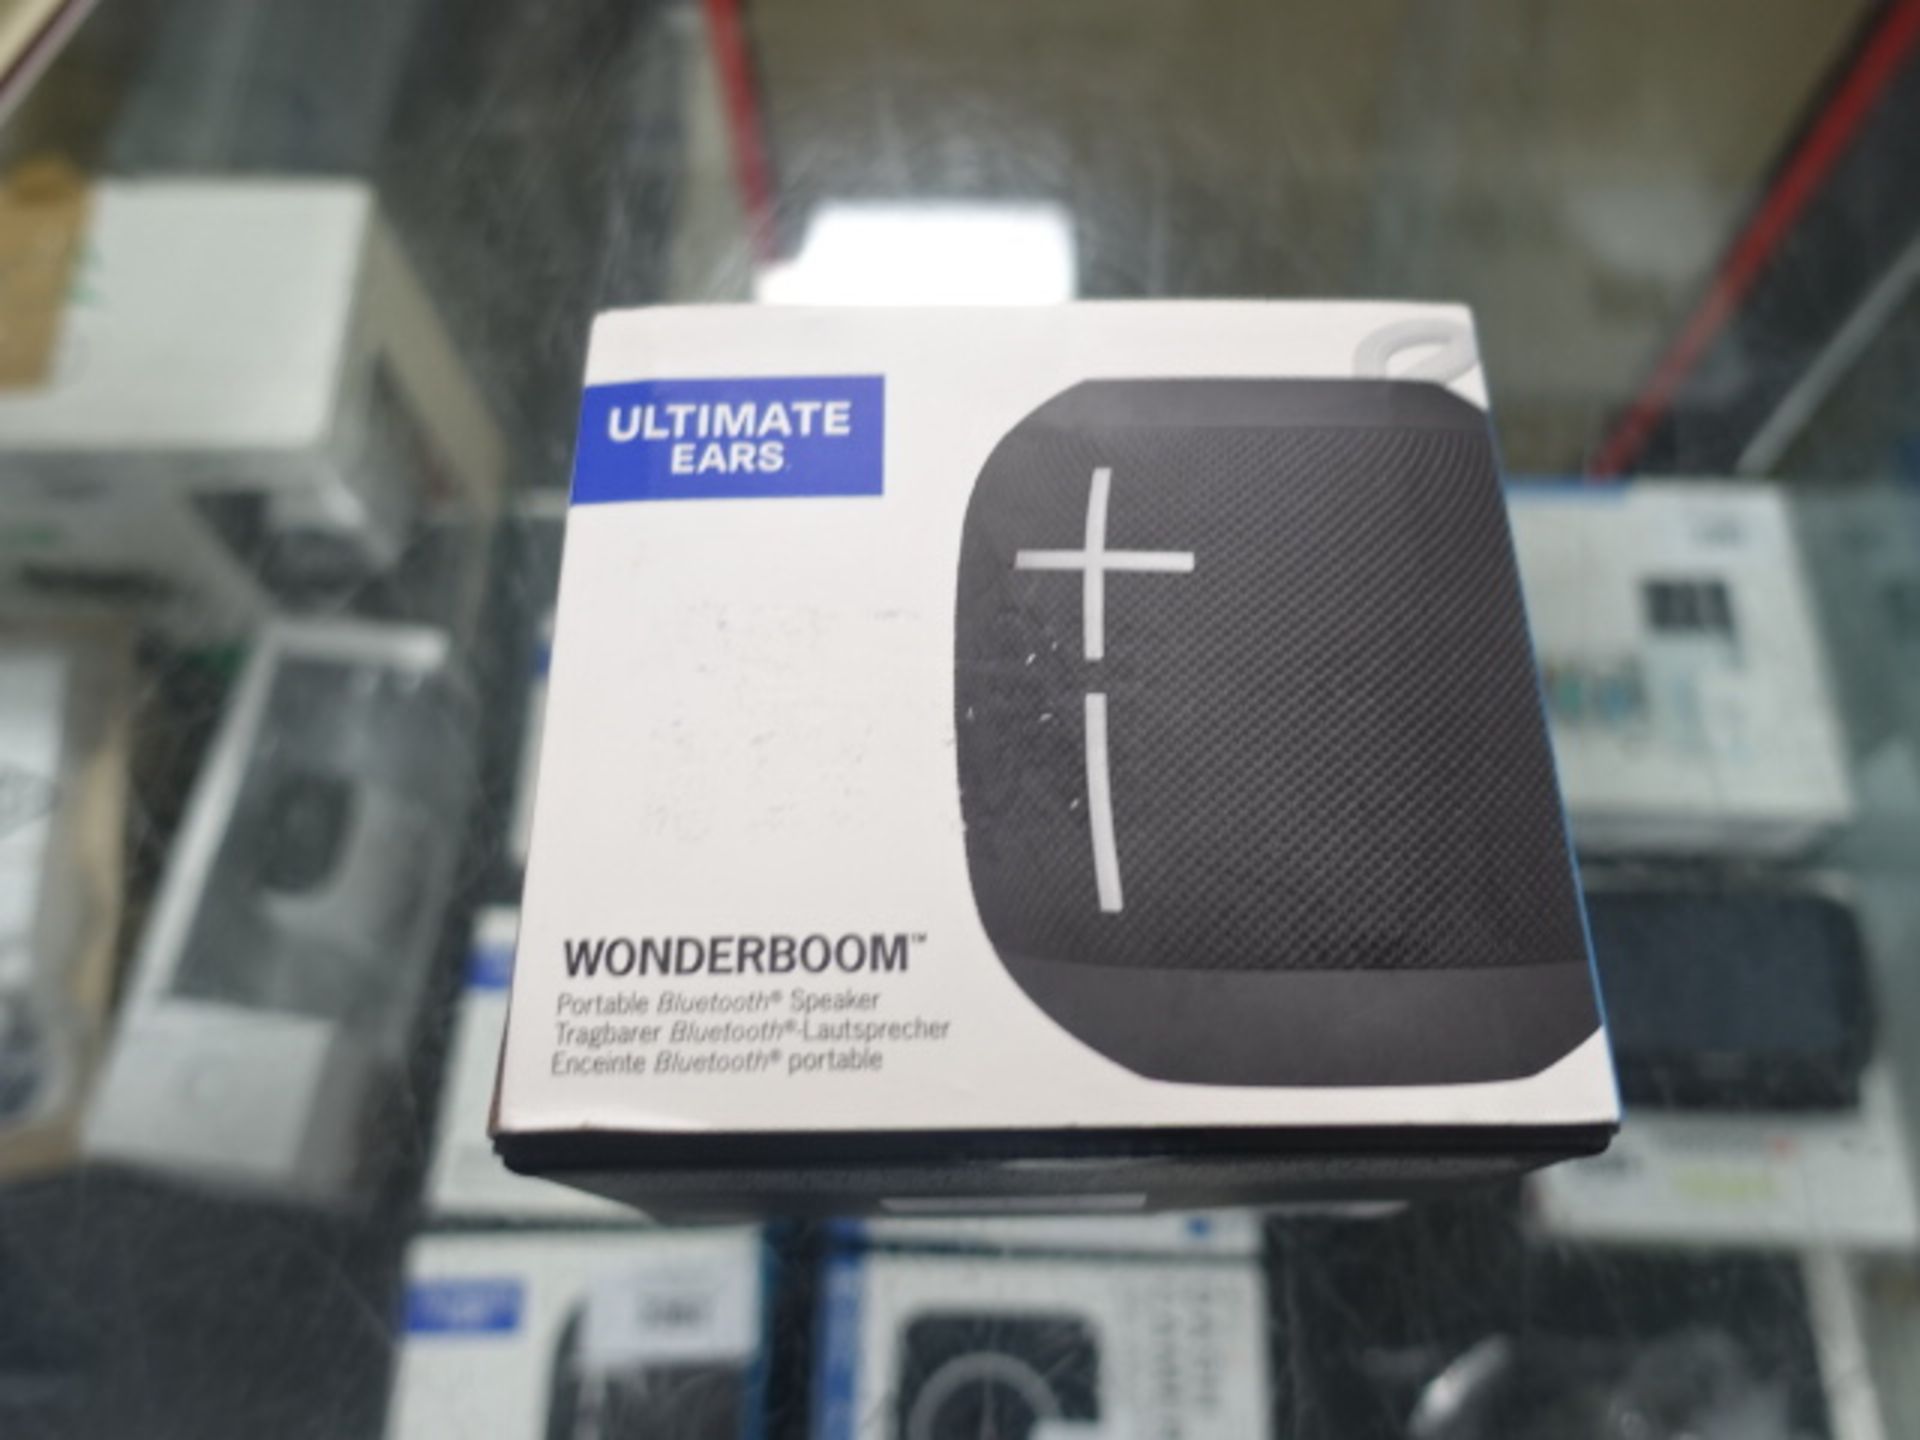 Ultimate Ears Wonderboom bluetooth speaker with box